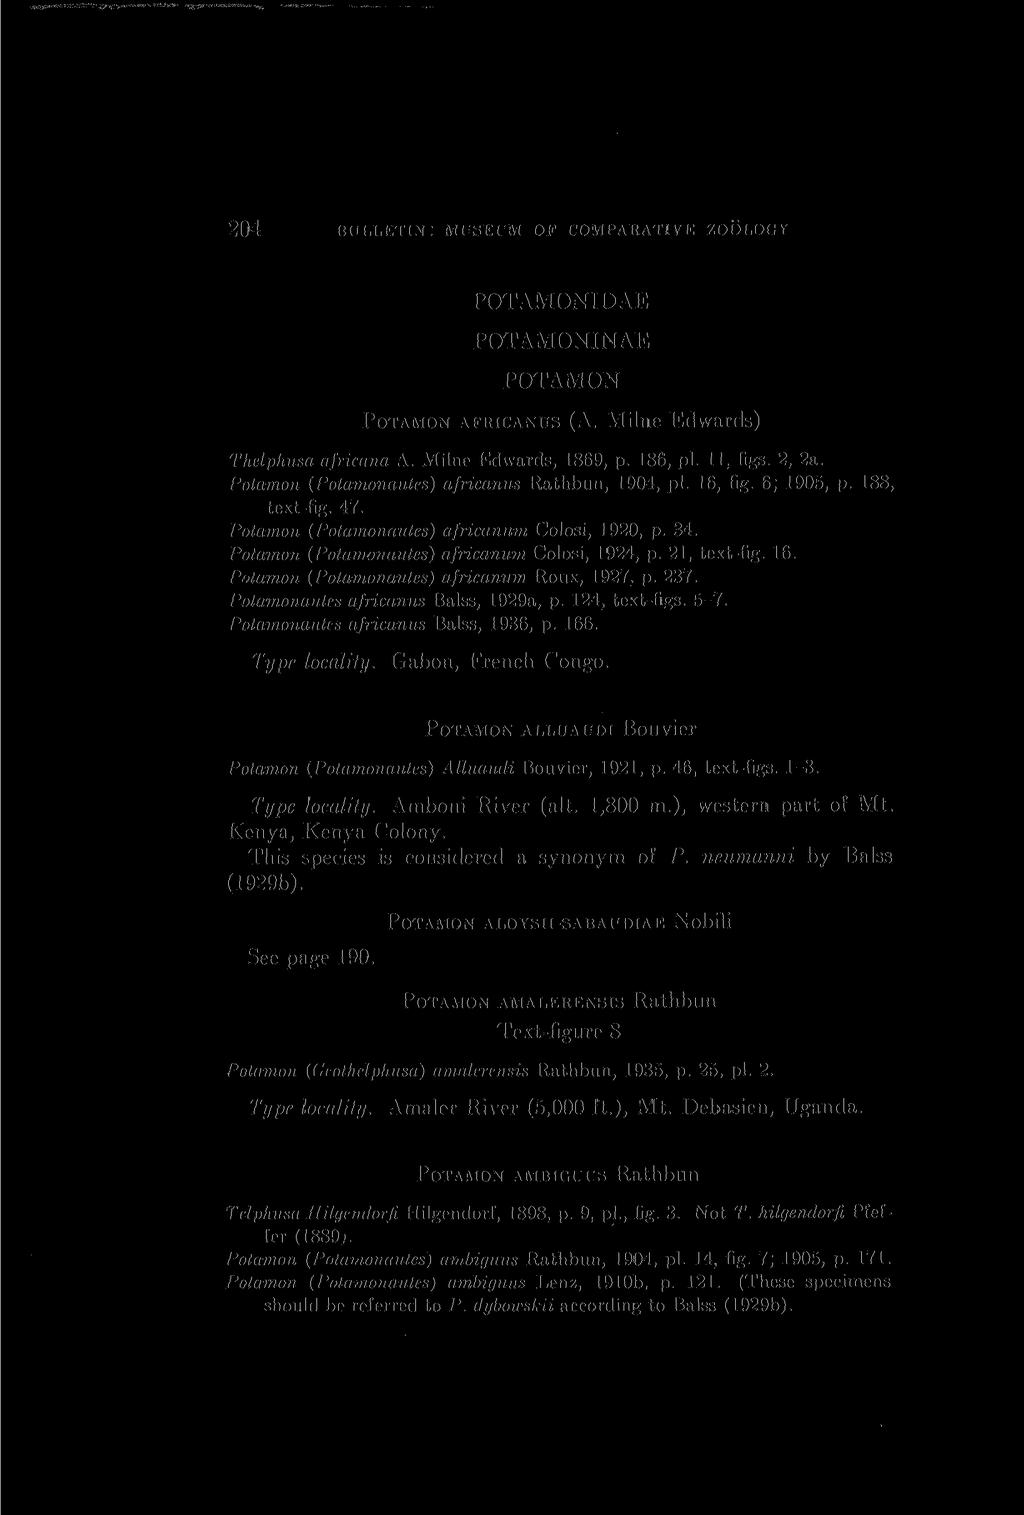 204 BULLETIN: MUSEUM OF COMPARATIVE ZOOLOGY POTAMON! DAE POTAMONINAE POTAMON POTAMON AFRICANUS (A. Milne Edwards) Thelphusa africana A. Milne Edwards, 1869, p. 186, pi. 11, figs. 2, 2a.